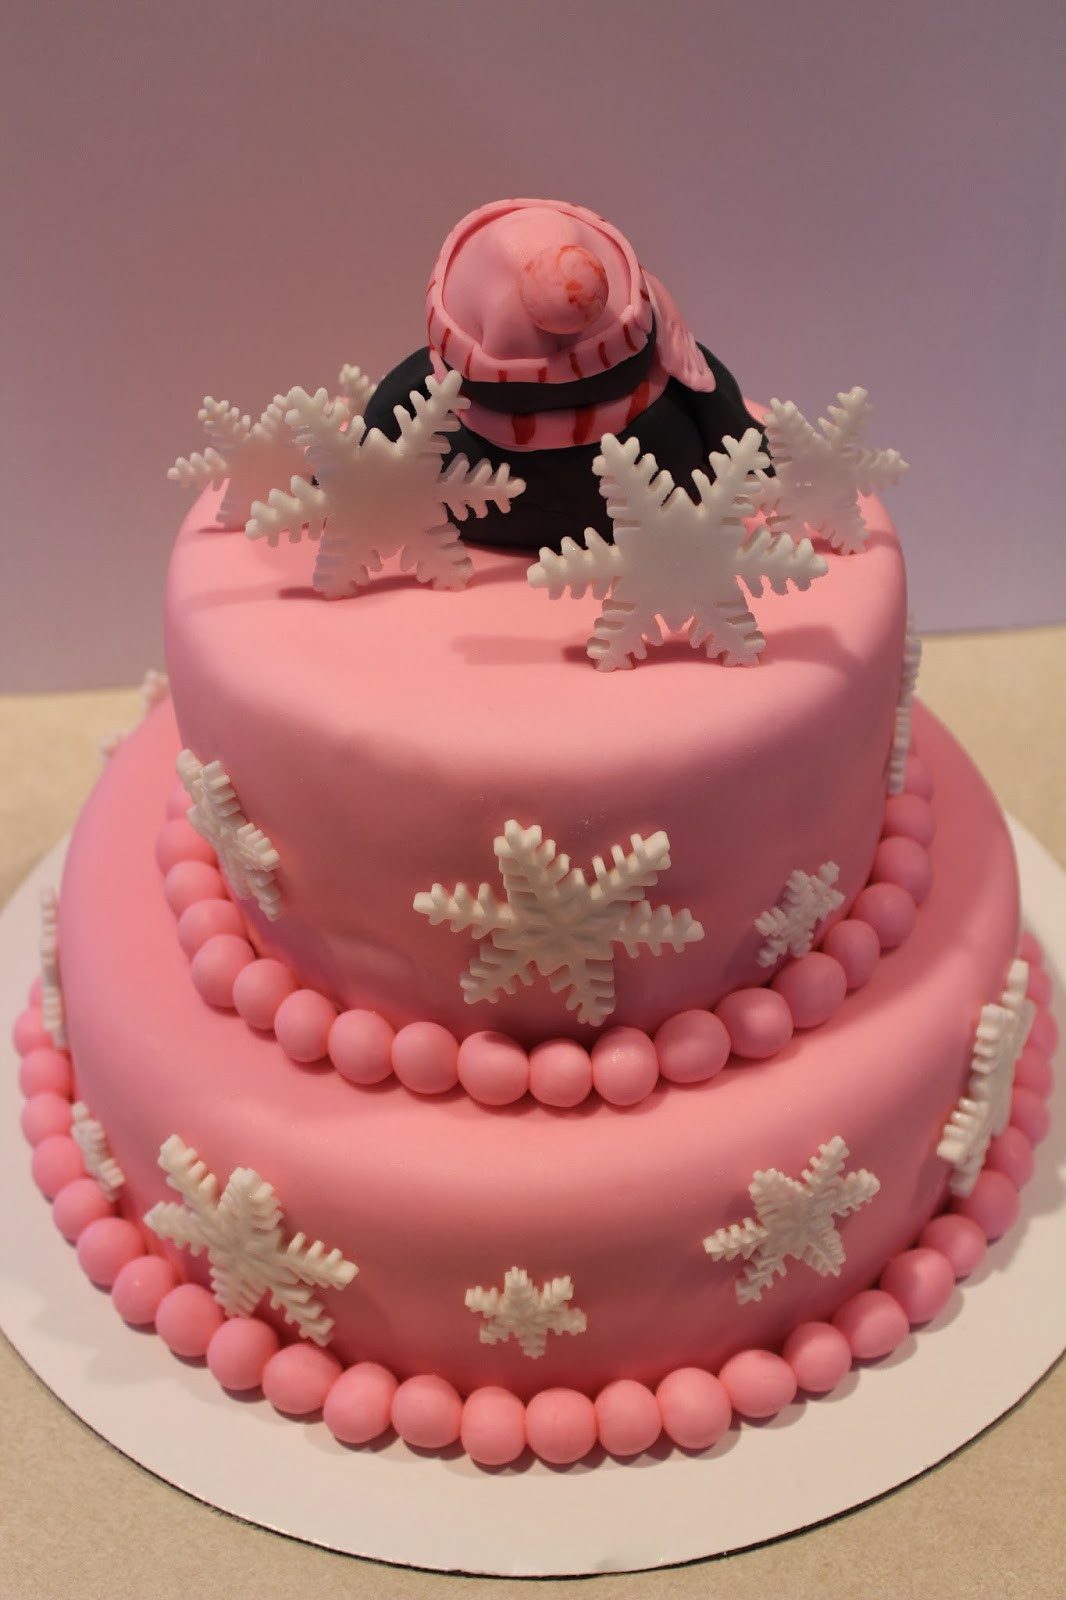 How To Make Birthday Cakes
 Cake It From Me Penguin snowflake birthday cake